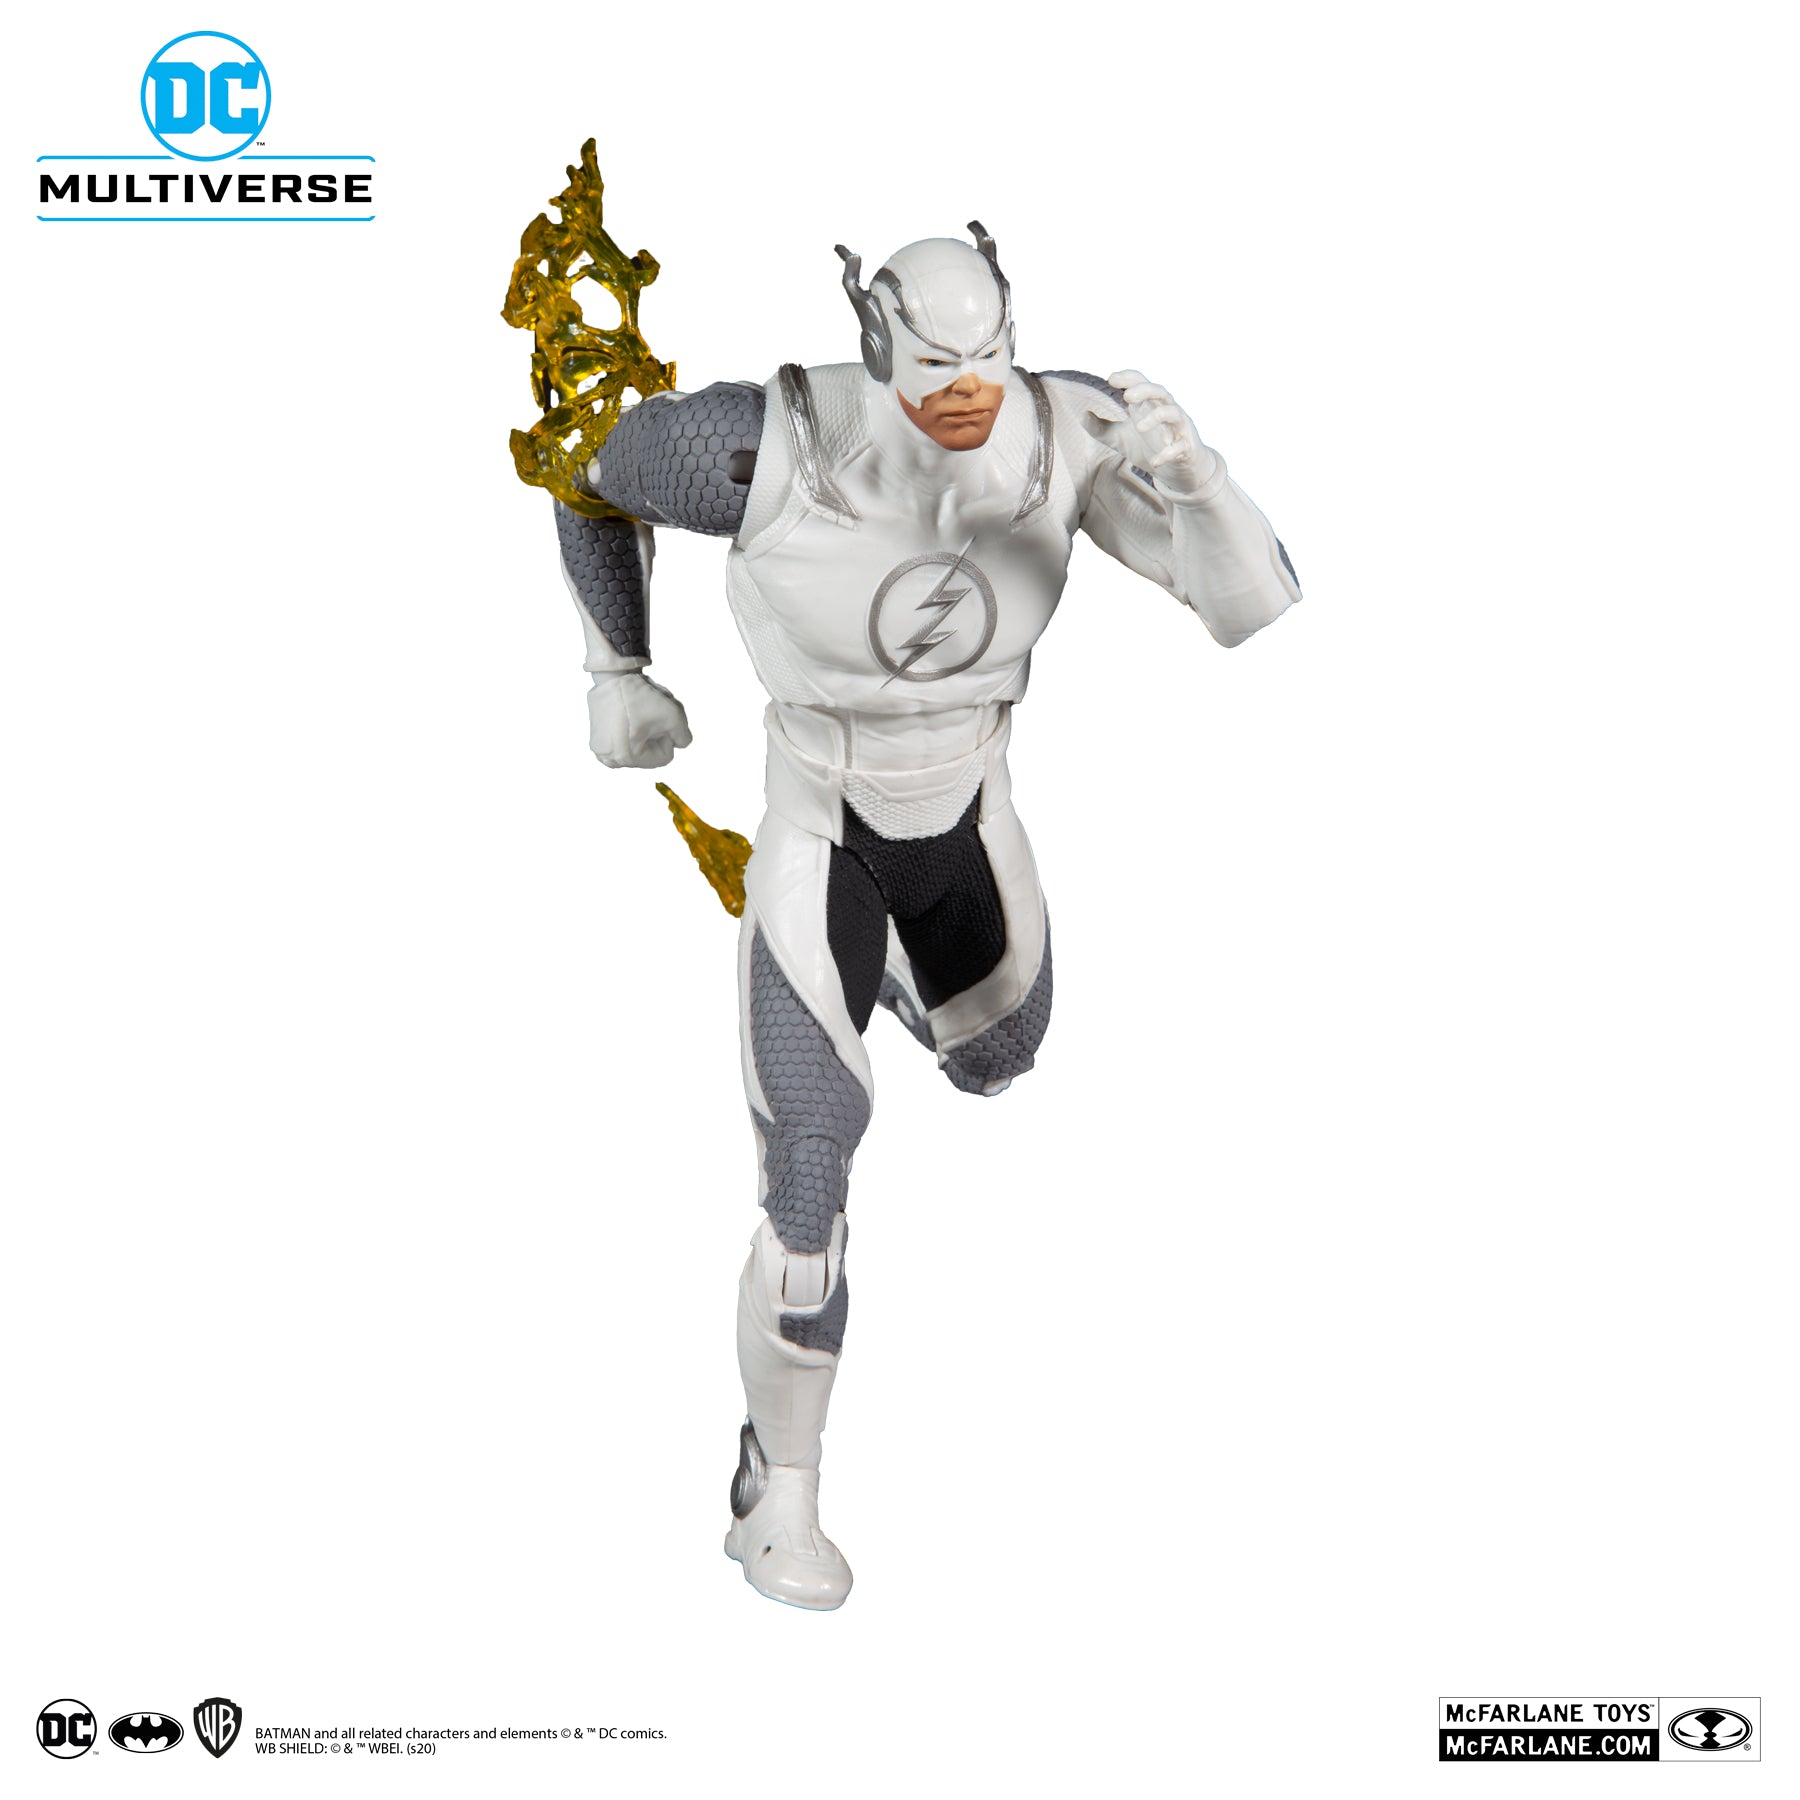 DC Multiverse Injustice 2 The Flash Hot Pursuit- McFarlane Toys